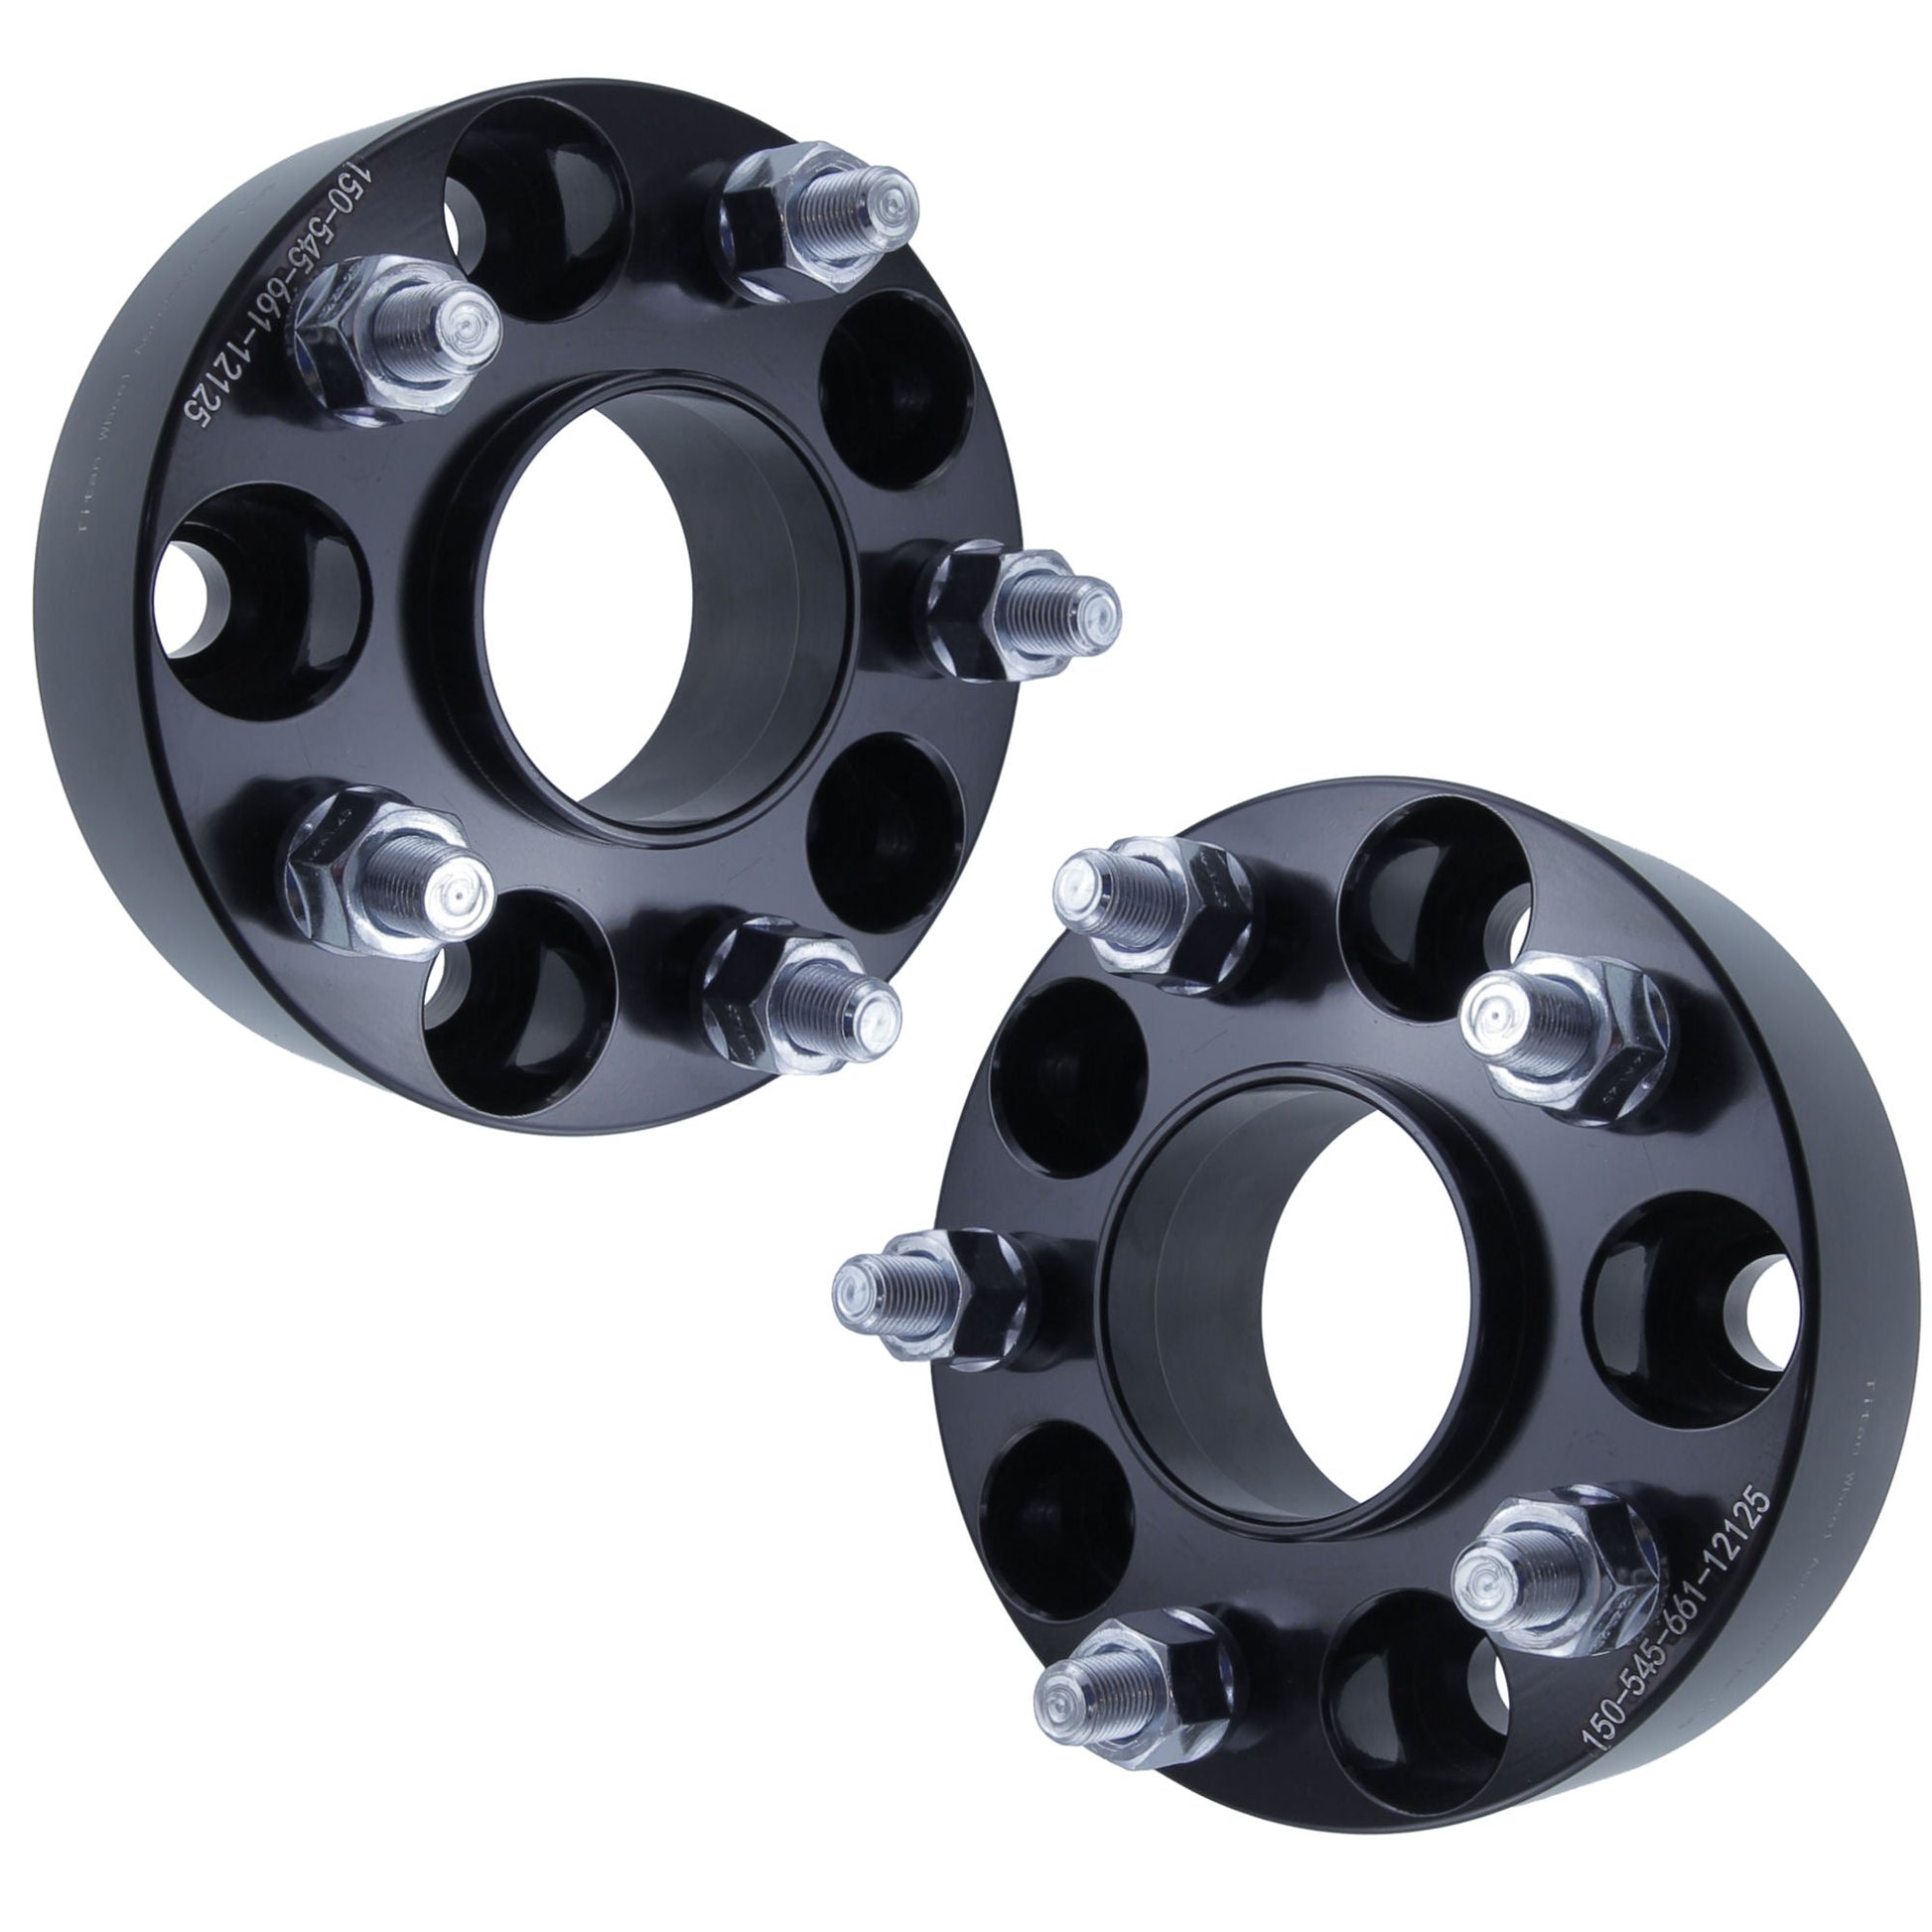 75mm (3") Titan Wheel Spacers for Nissan Altima Maxima 350z 370z Infiniti G35 G37 Q50 | 5x114.3 (5x4.5) | 66.1 Hubcentric |12x1.25 Studs | Set of 4 | Titan Wheel Accessories